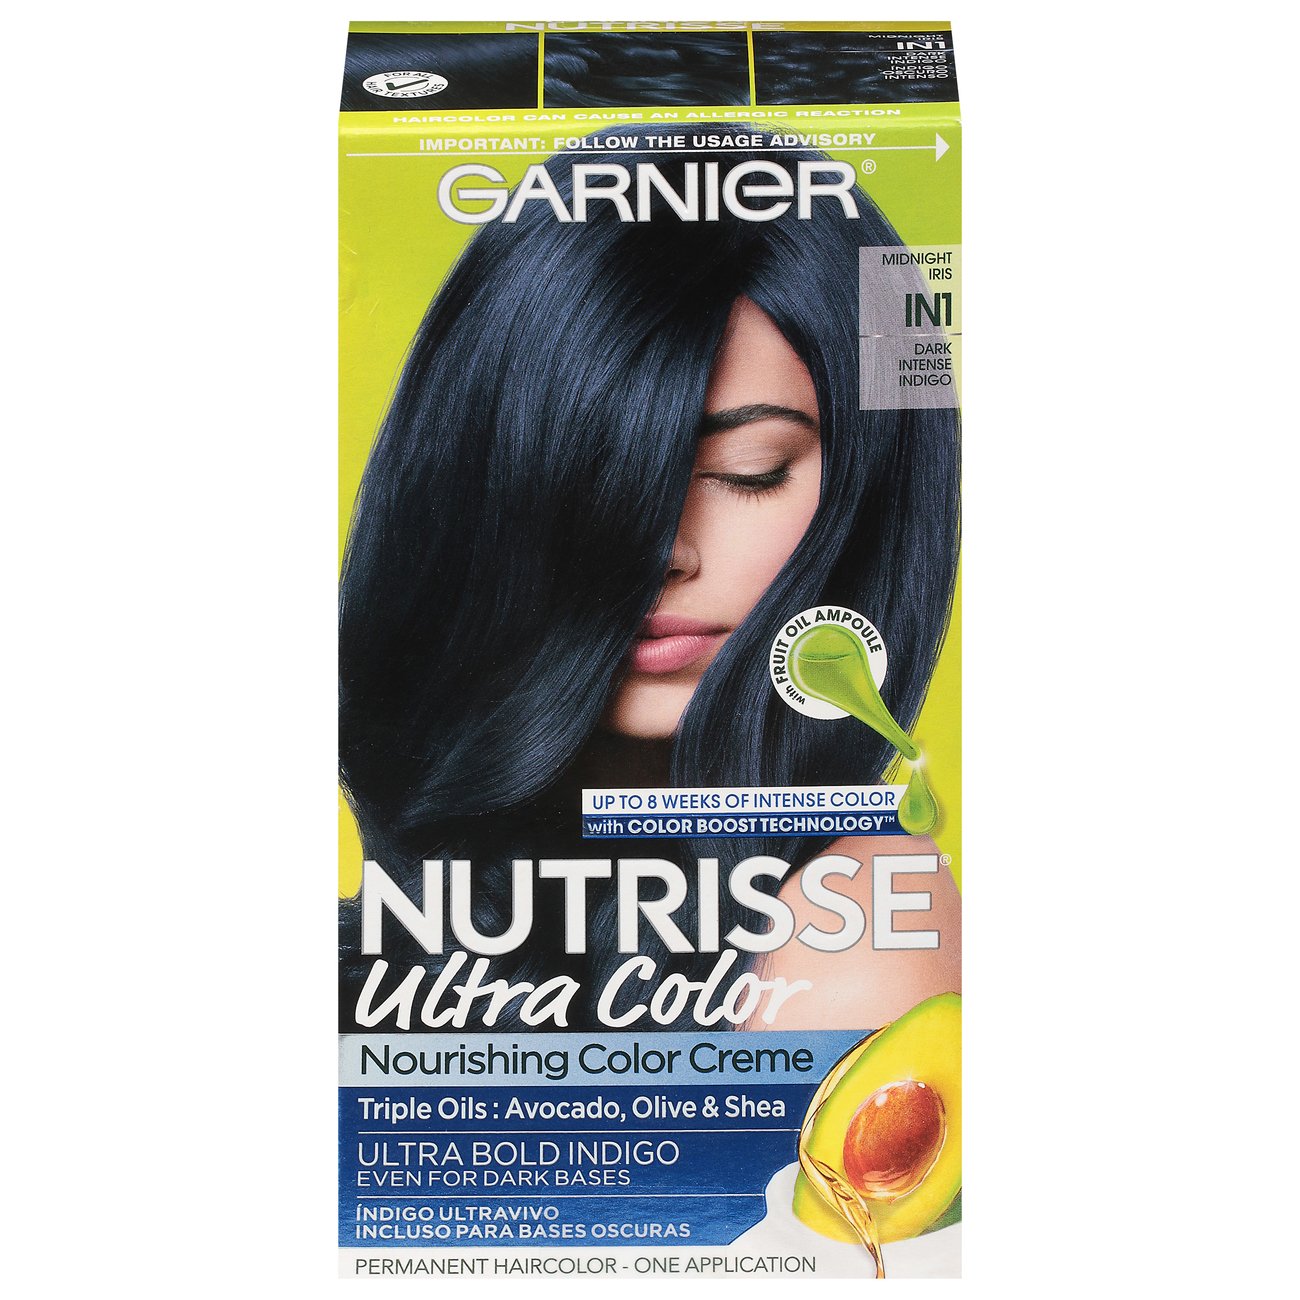 Garnier Nutrisse Ultra Color Nourishing Bold Permanent Hair Color Creme IN1  Dark Intense Indigo - Shop Hair Color at H-E-B